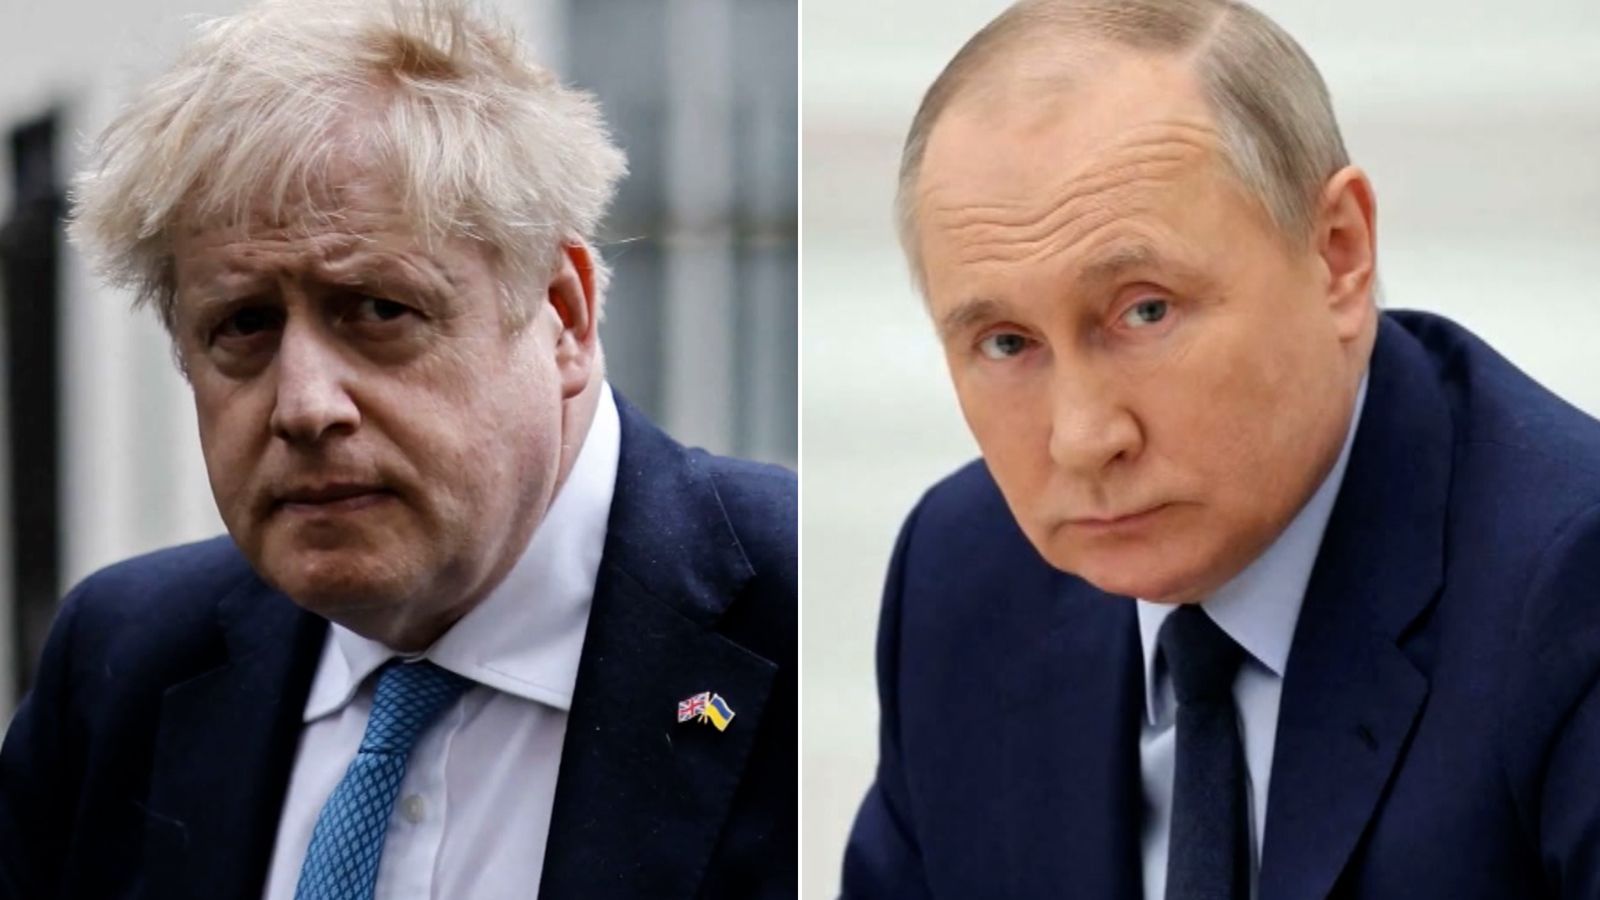 Hear Boris Johnson describe how he says Putin threatened him | CNN